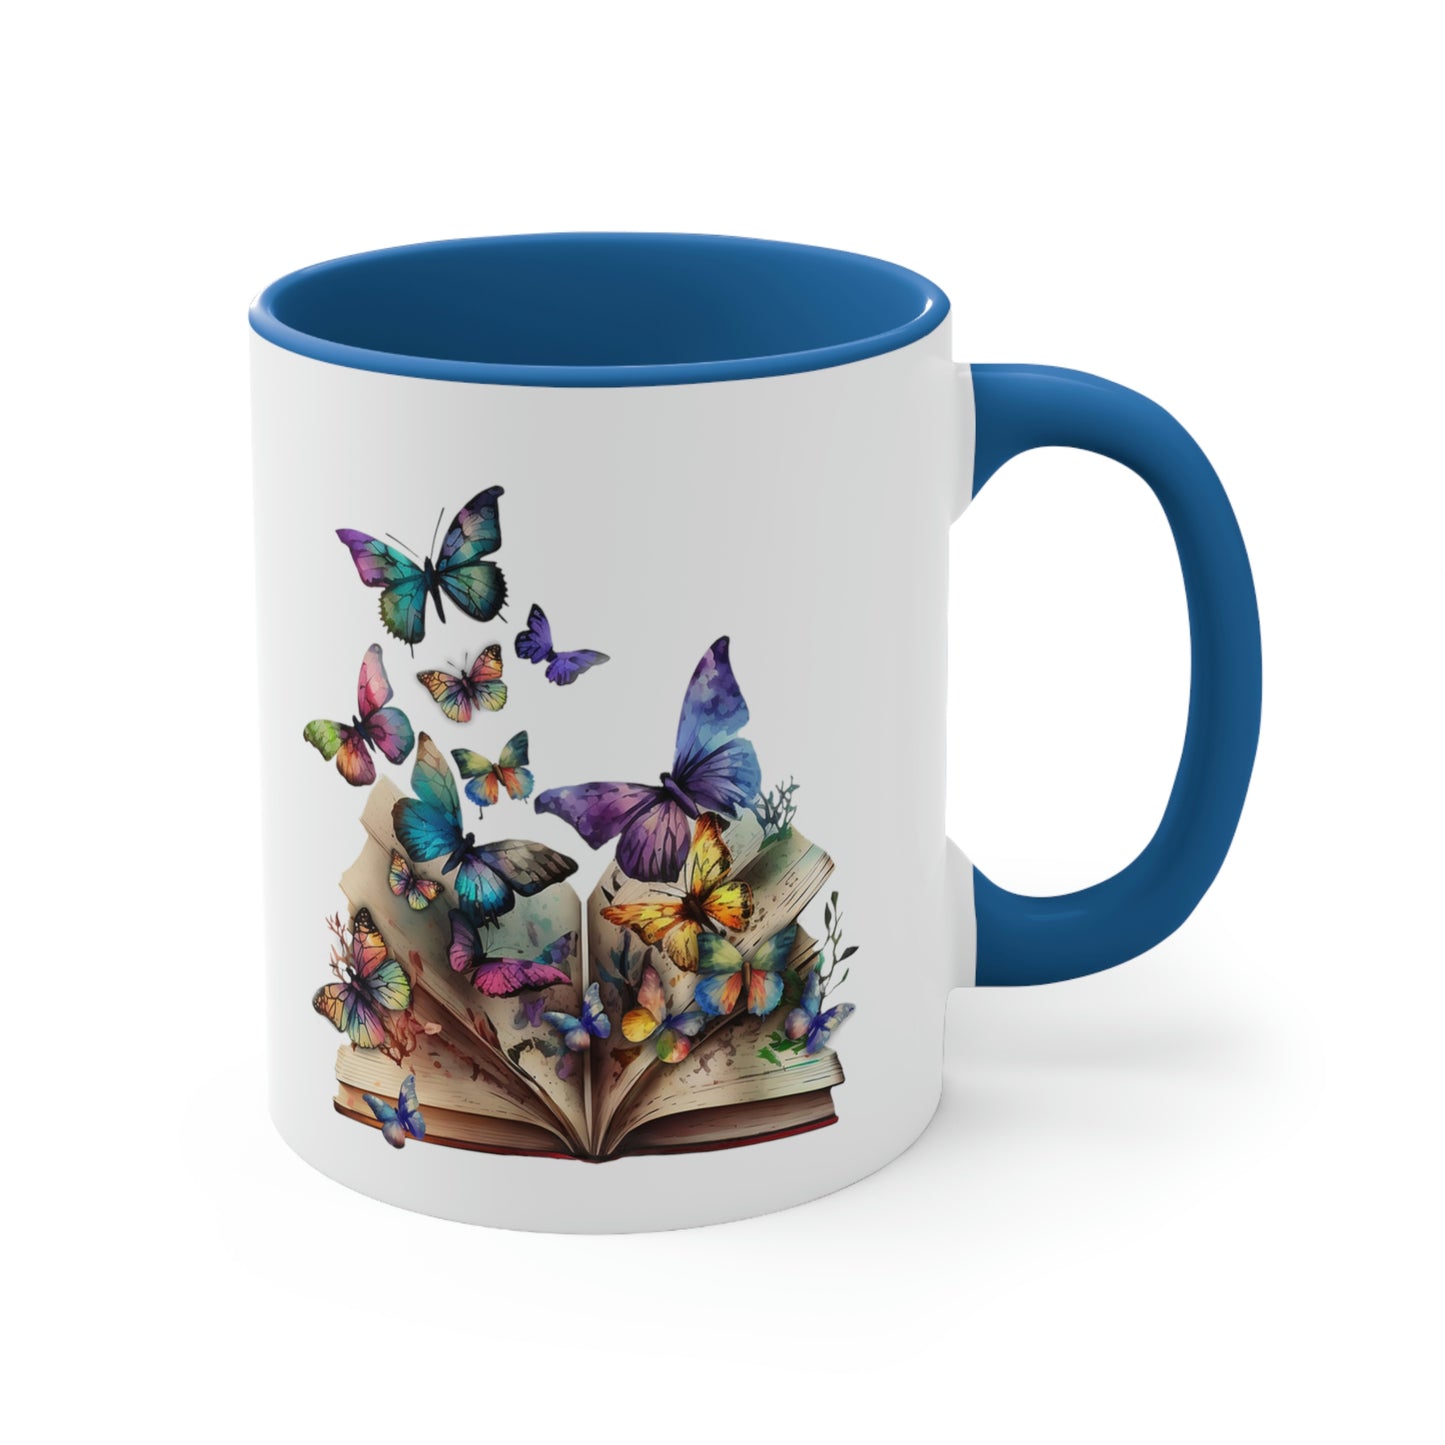 Colorful Butterfly Book Mug, Butterfly Lover Gift, Bookworm Mug,Literary Gift,Reading Mug,Butterfly Decor Book Lover Mug,Butterfly Magic Mug